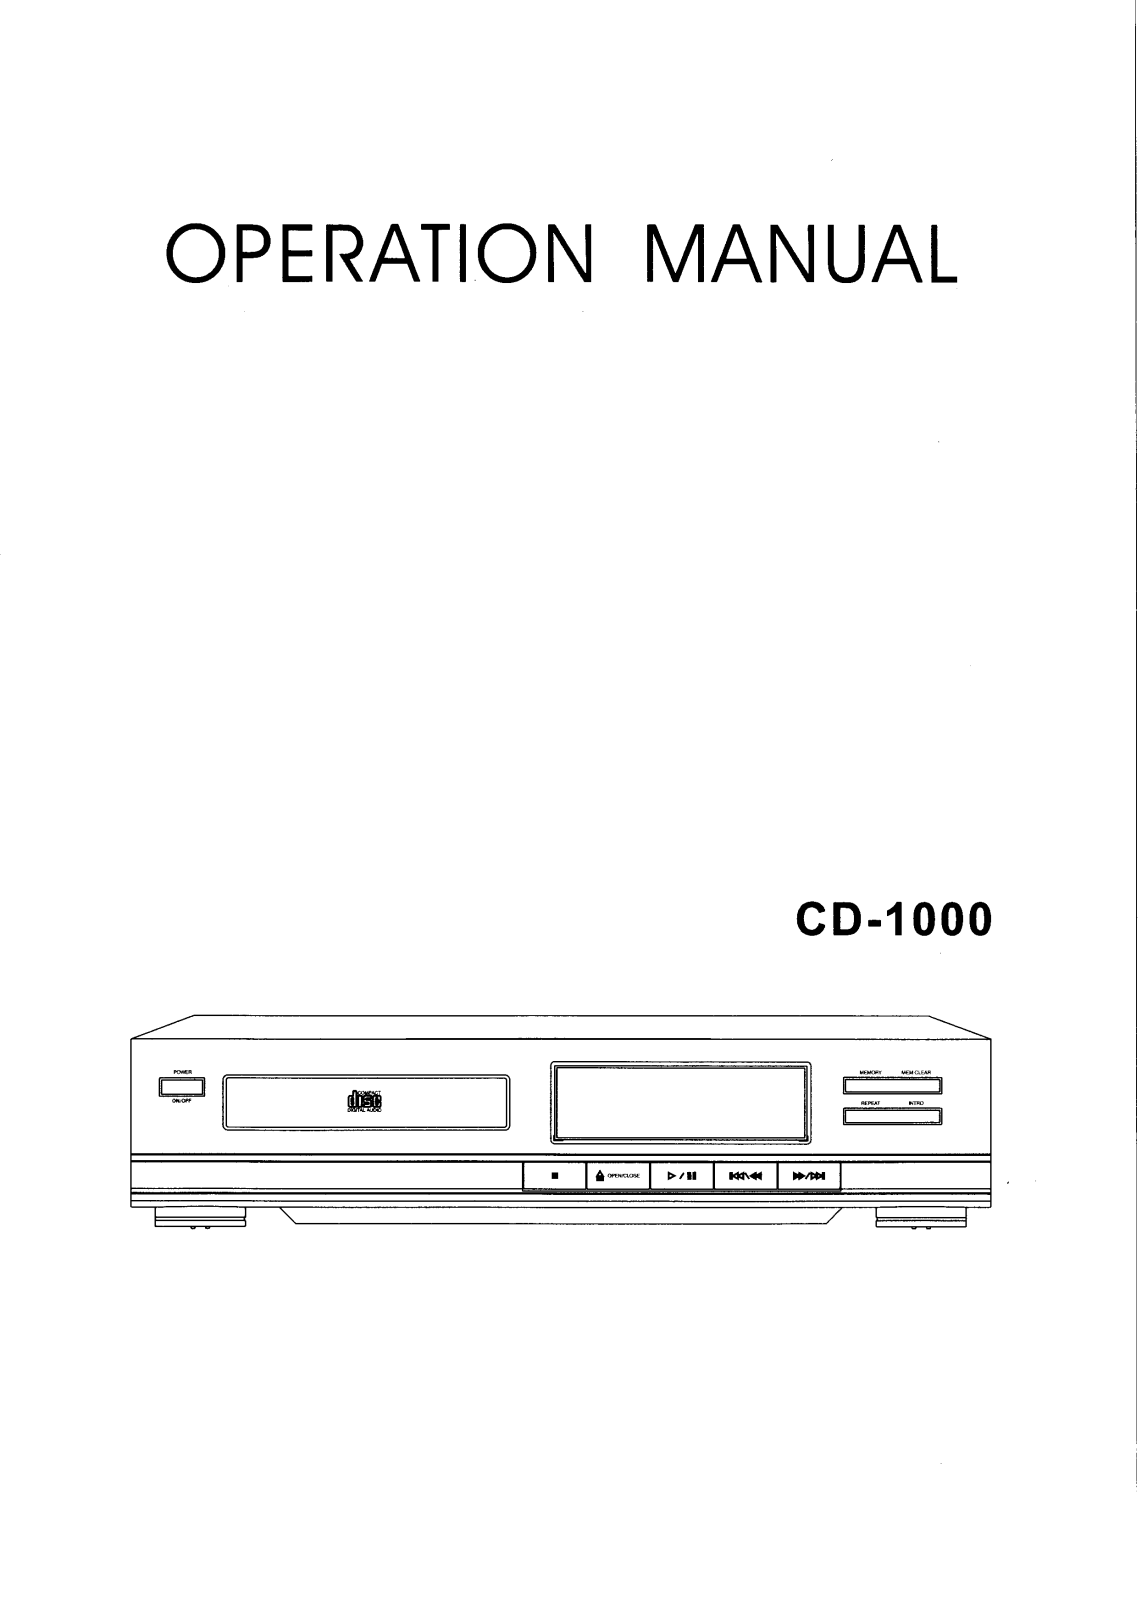 X4 Tech CD-1000 Operation Manual